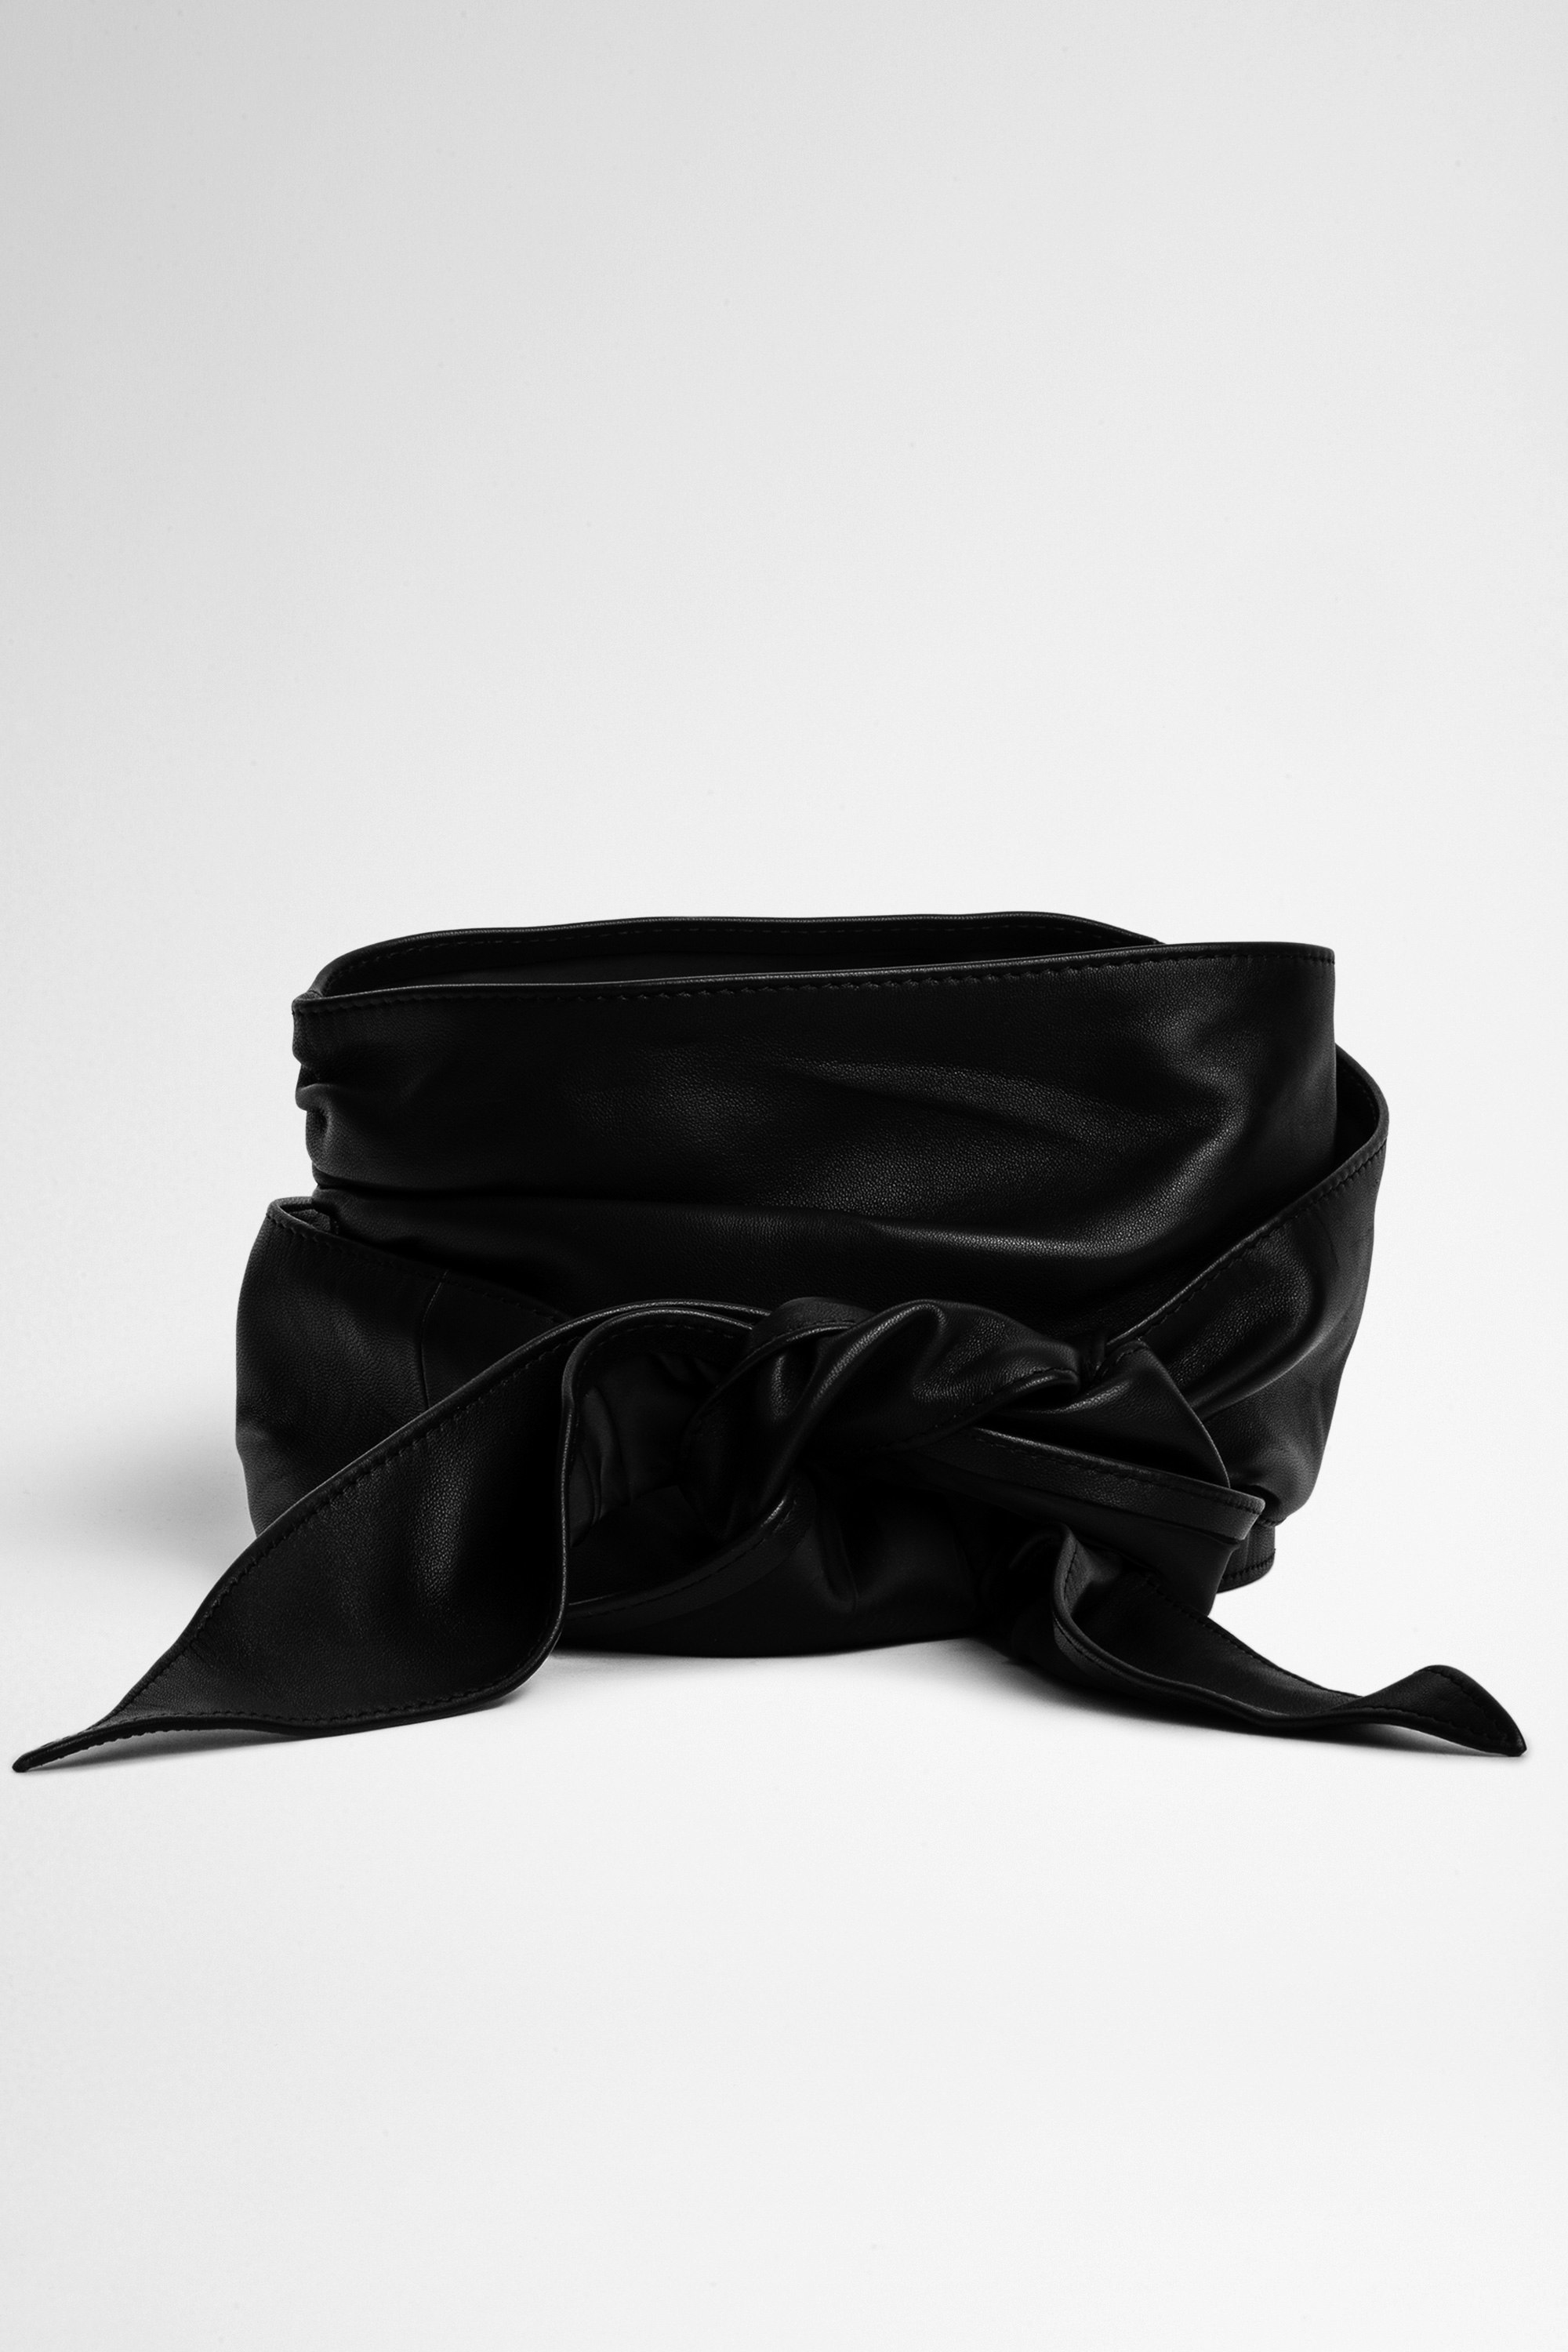 Smock'in レザーベルト Women's tied belt in black leather